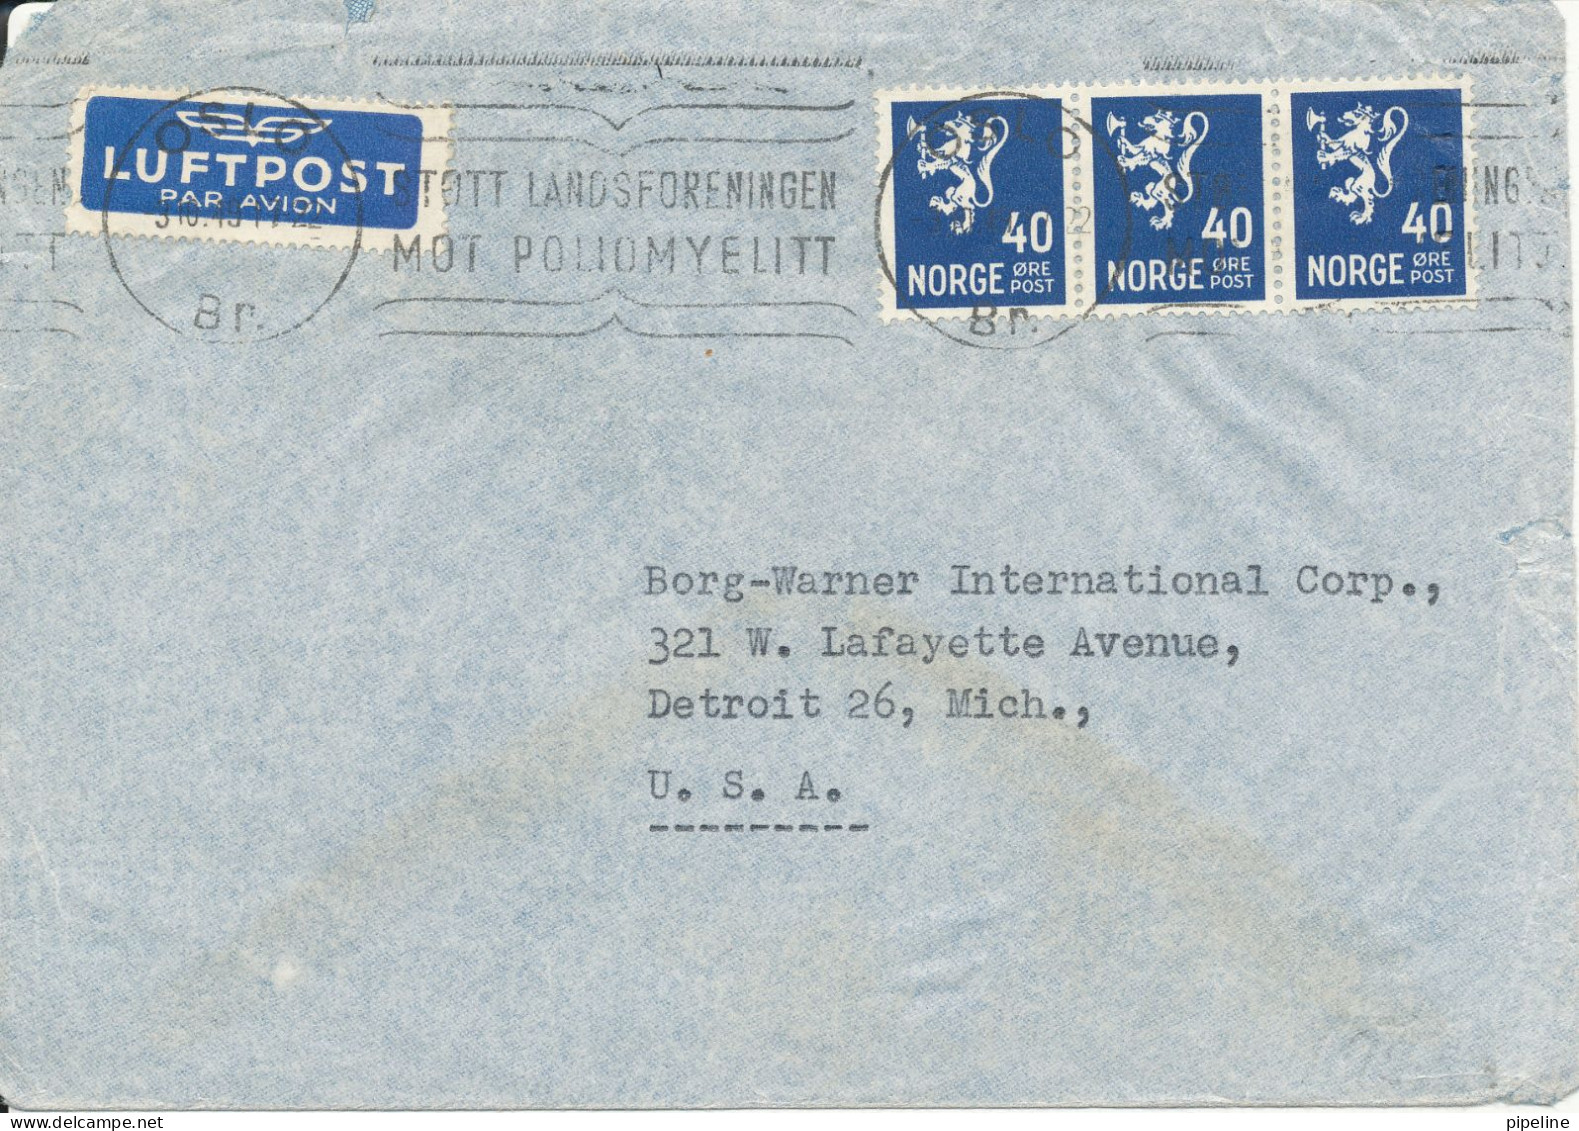 Norway Air Mail Cover Sent To USA 3-10-1949 (Stött Landsforeningen Mot Poliomyelitt) (A/S Norge Rollator Oslo) - Storia Postale